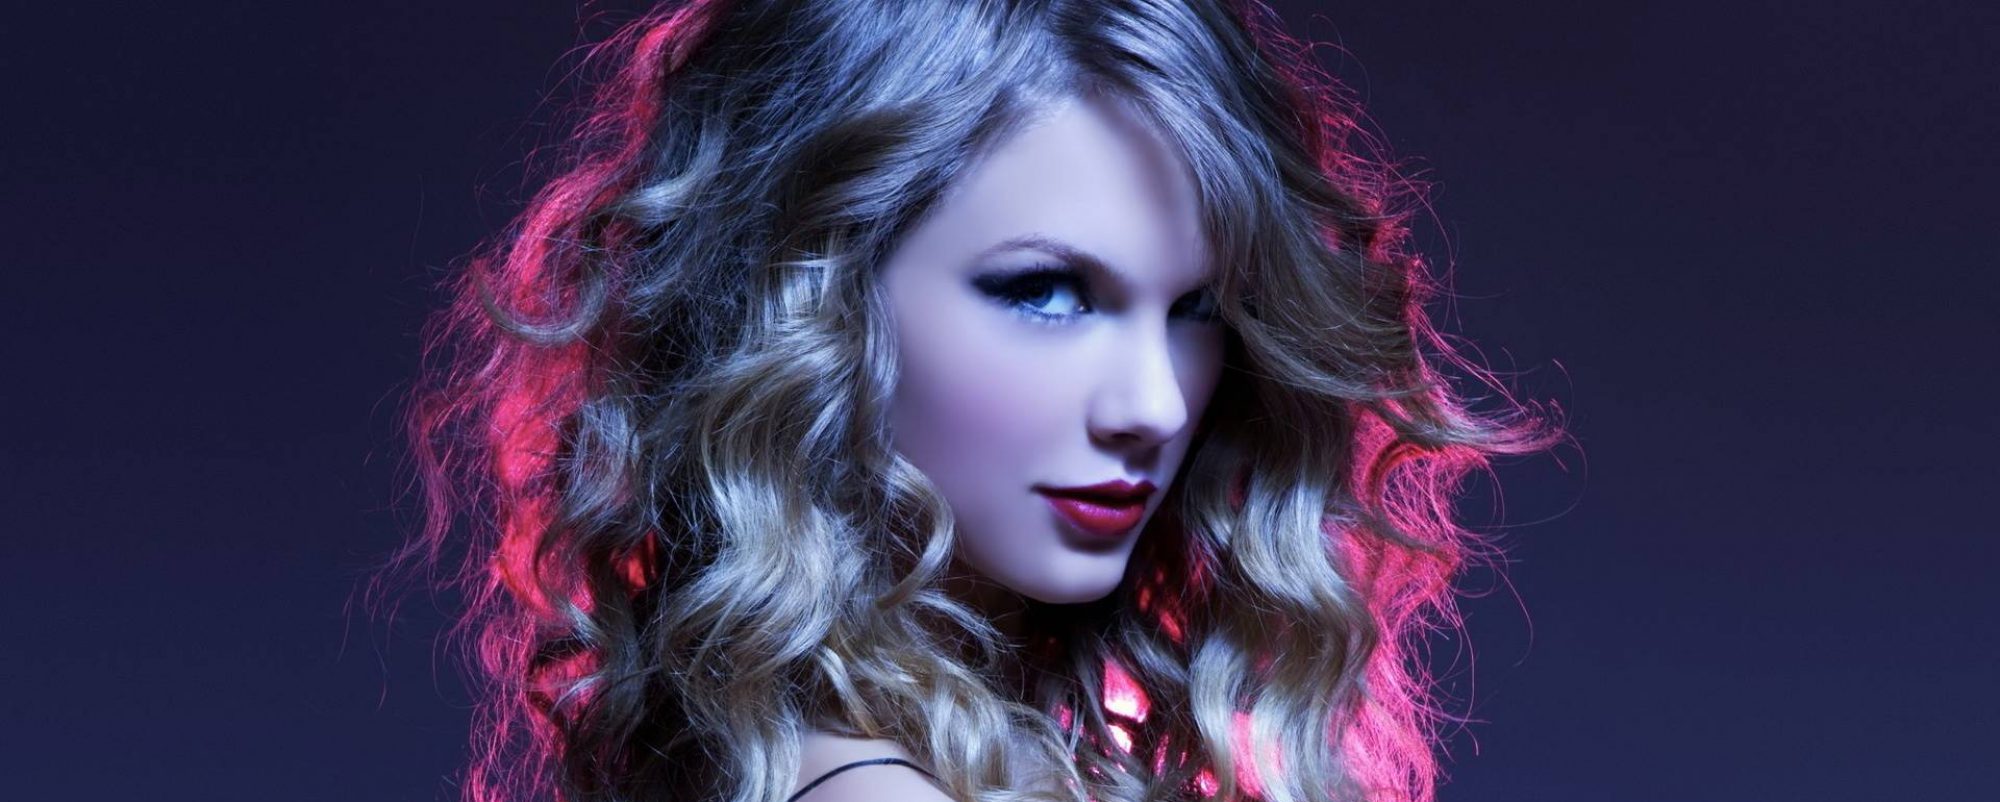 Taylor Swift evitó que “Despacito” rompiera el record de Mariah Carey. Cusica Plus